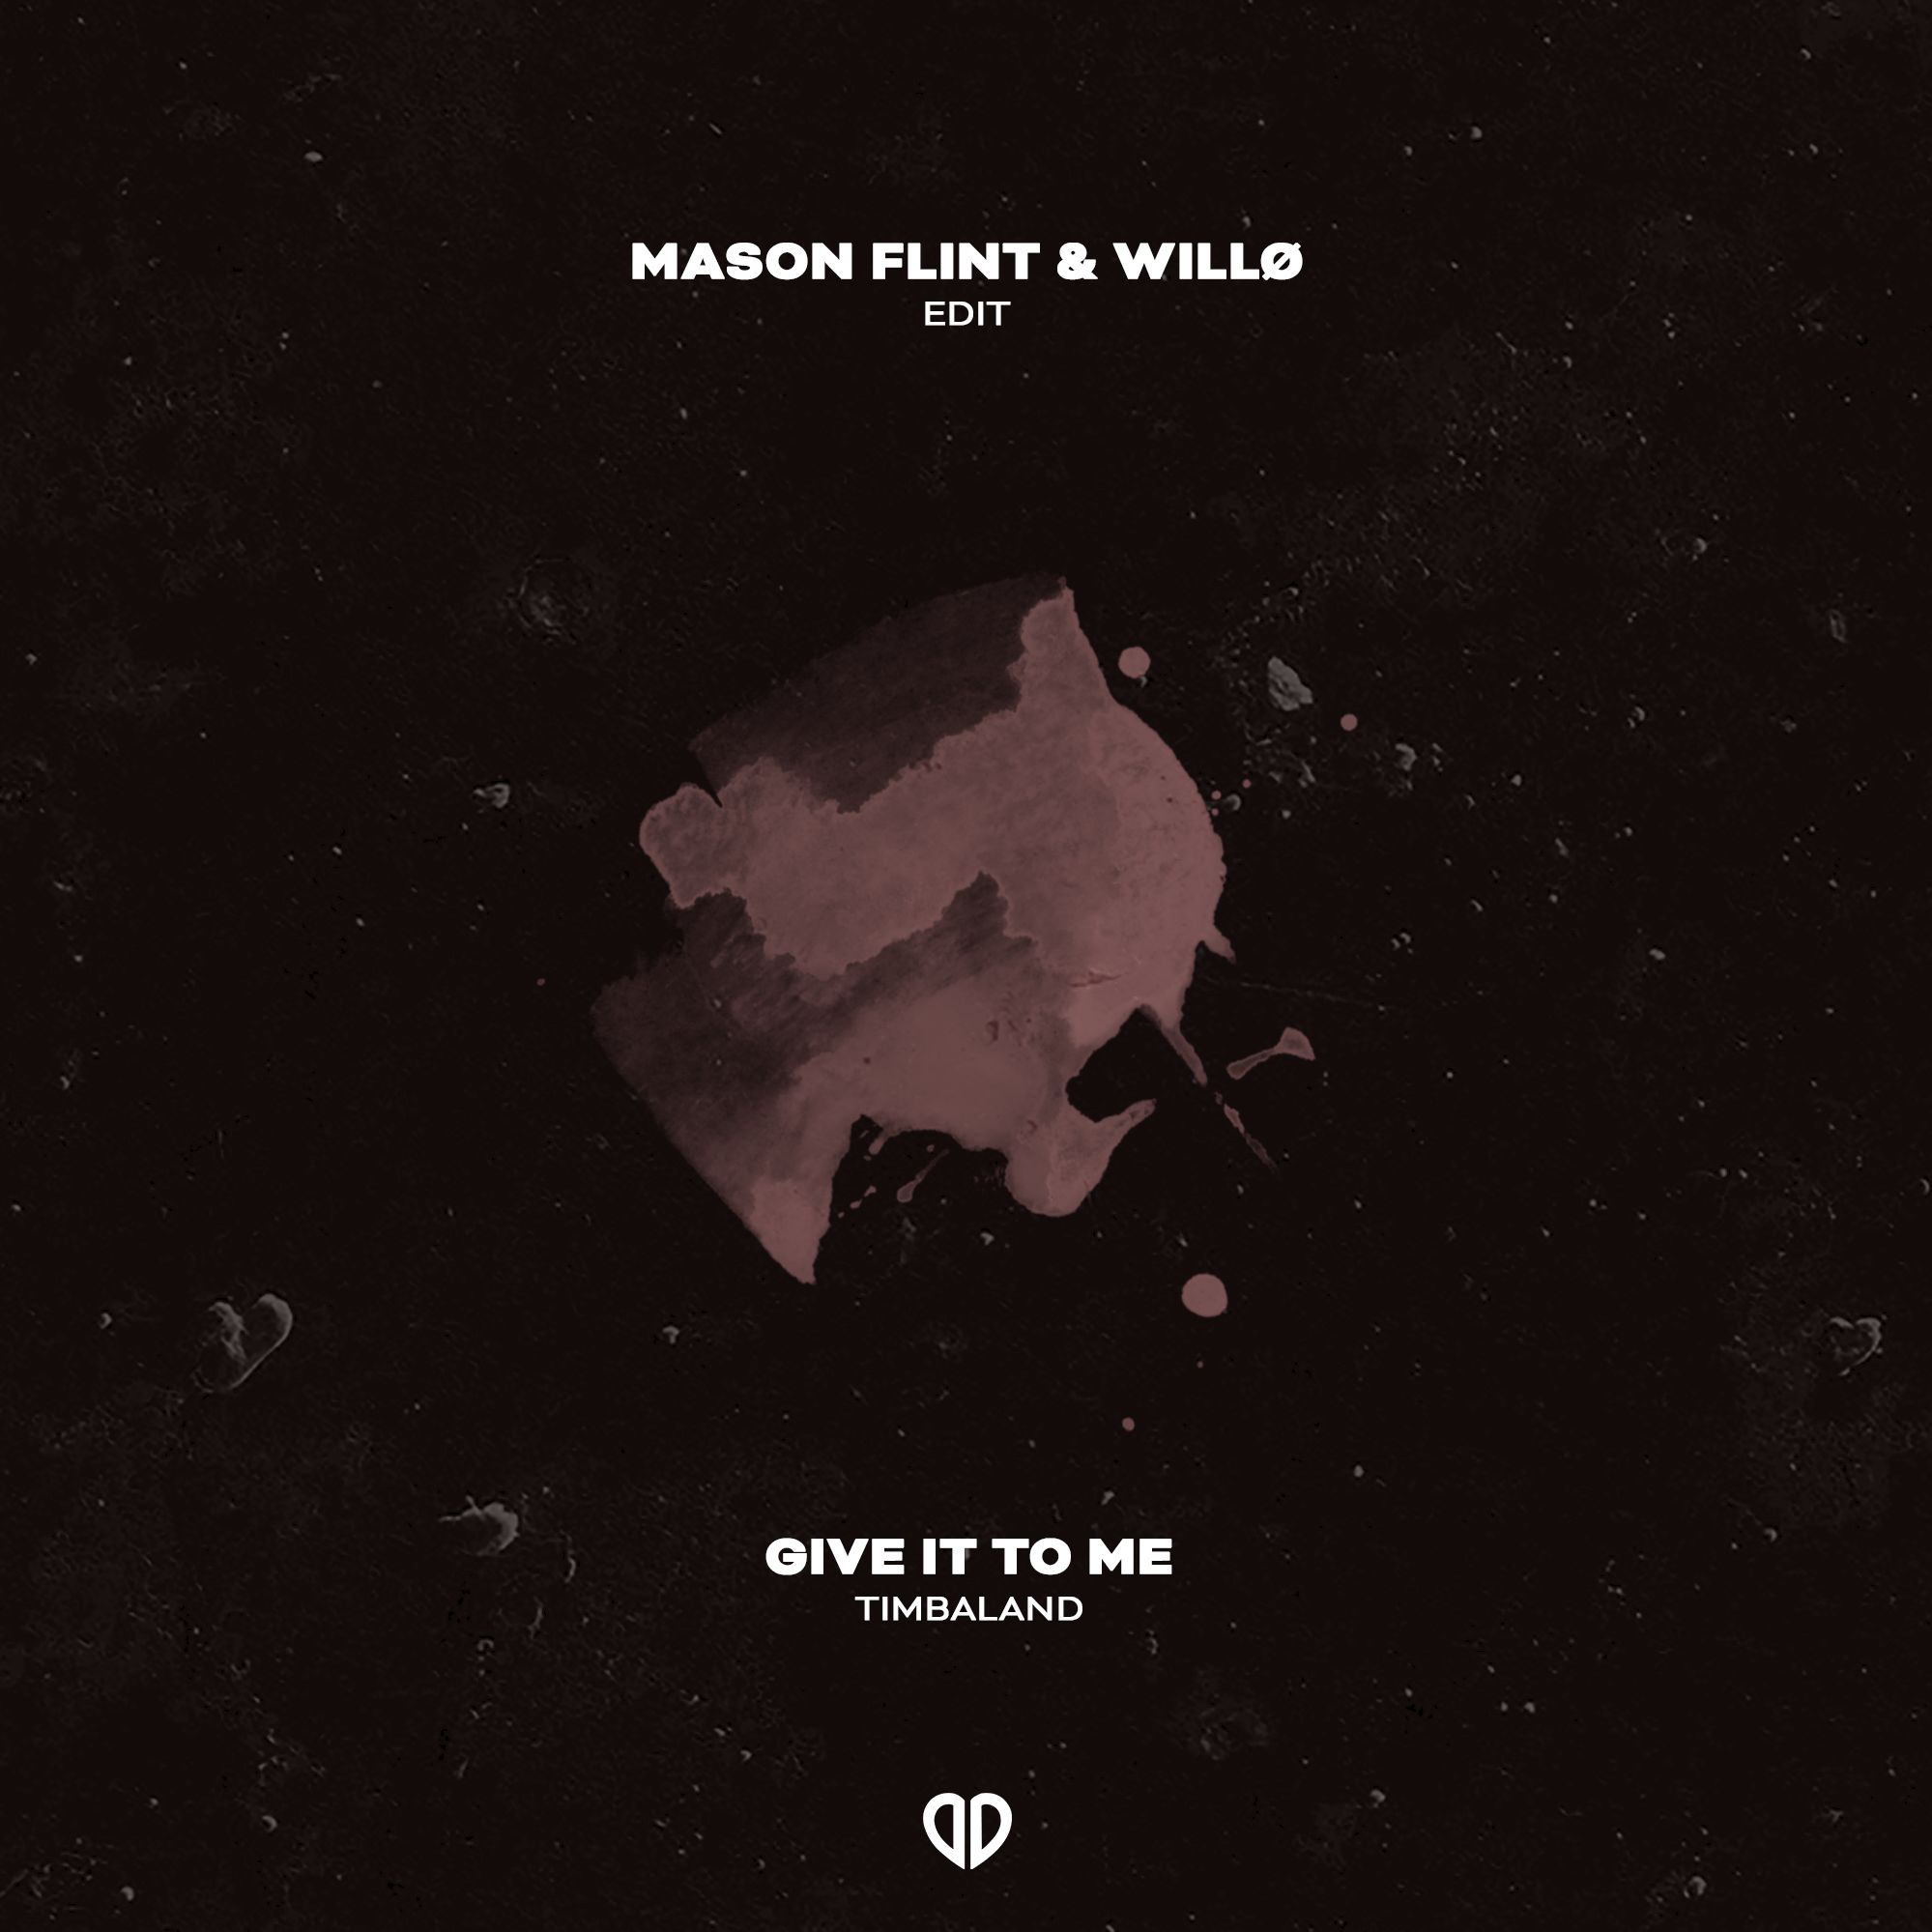 Sækja Timbaland - Give It To Me (Mason Flint & Willo Edit) [DropUnited Exclusive]